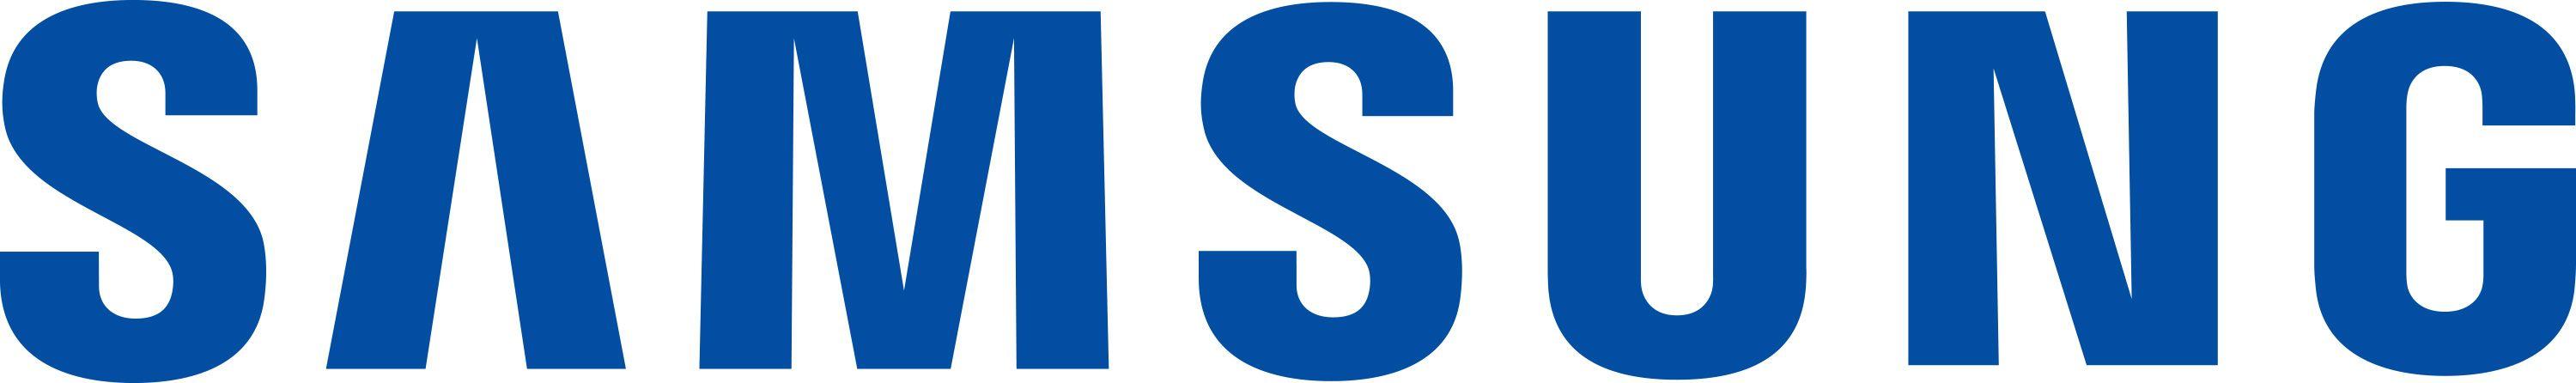 Samsung Electronics Logo - Samsung Electronics Logo | LOGOSURFER.COM